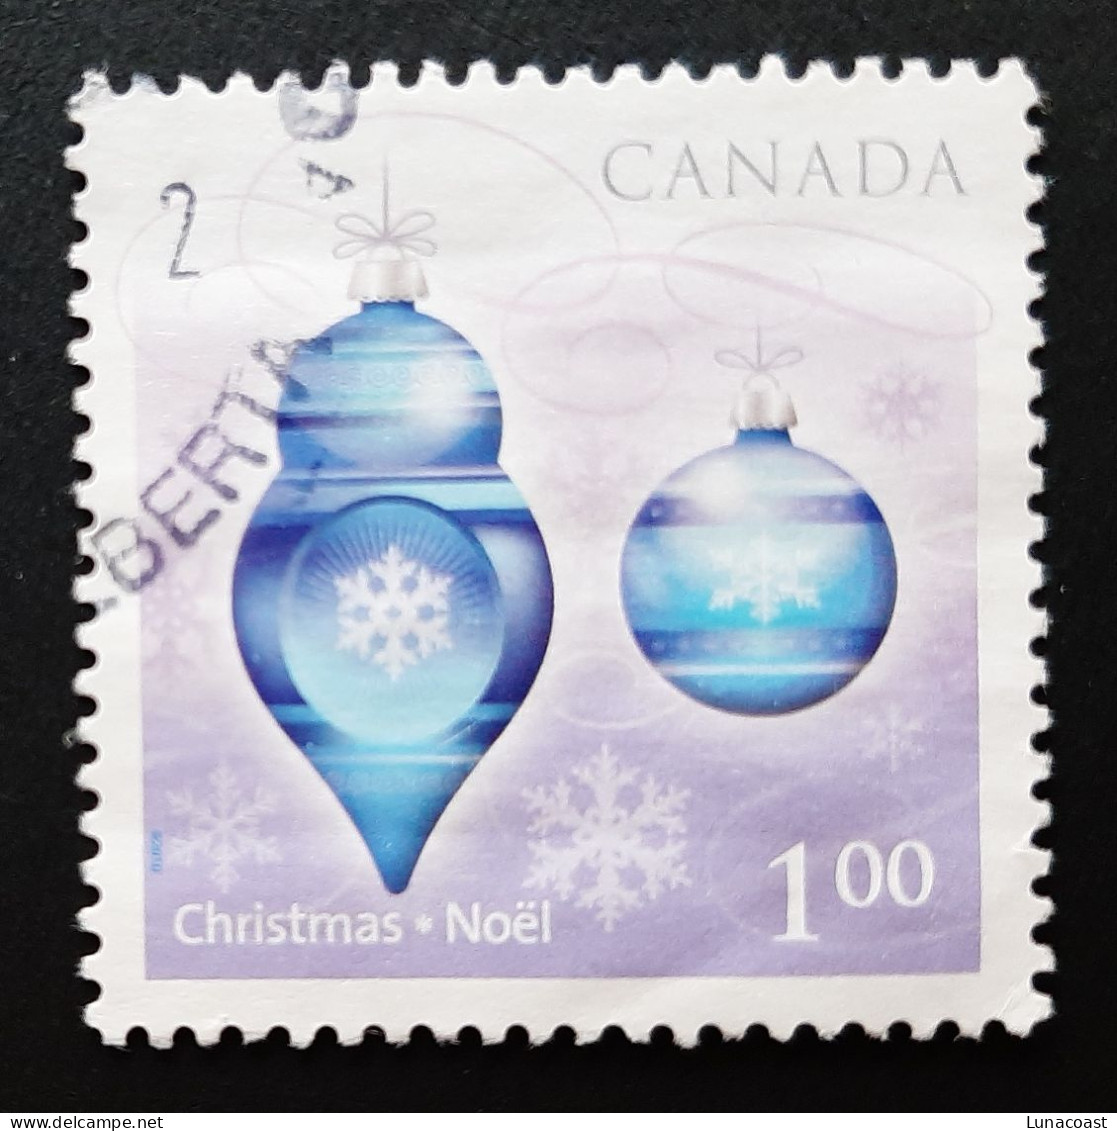 Canada 2010  USED Sc 2411 B   1.00$  Christmas From Souvenir Sheet, Perf.12.5 - Oblitérés